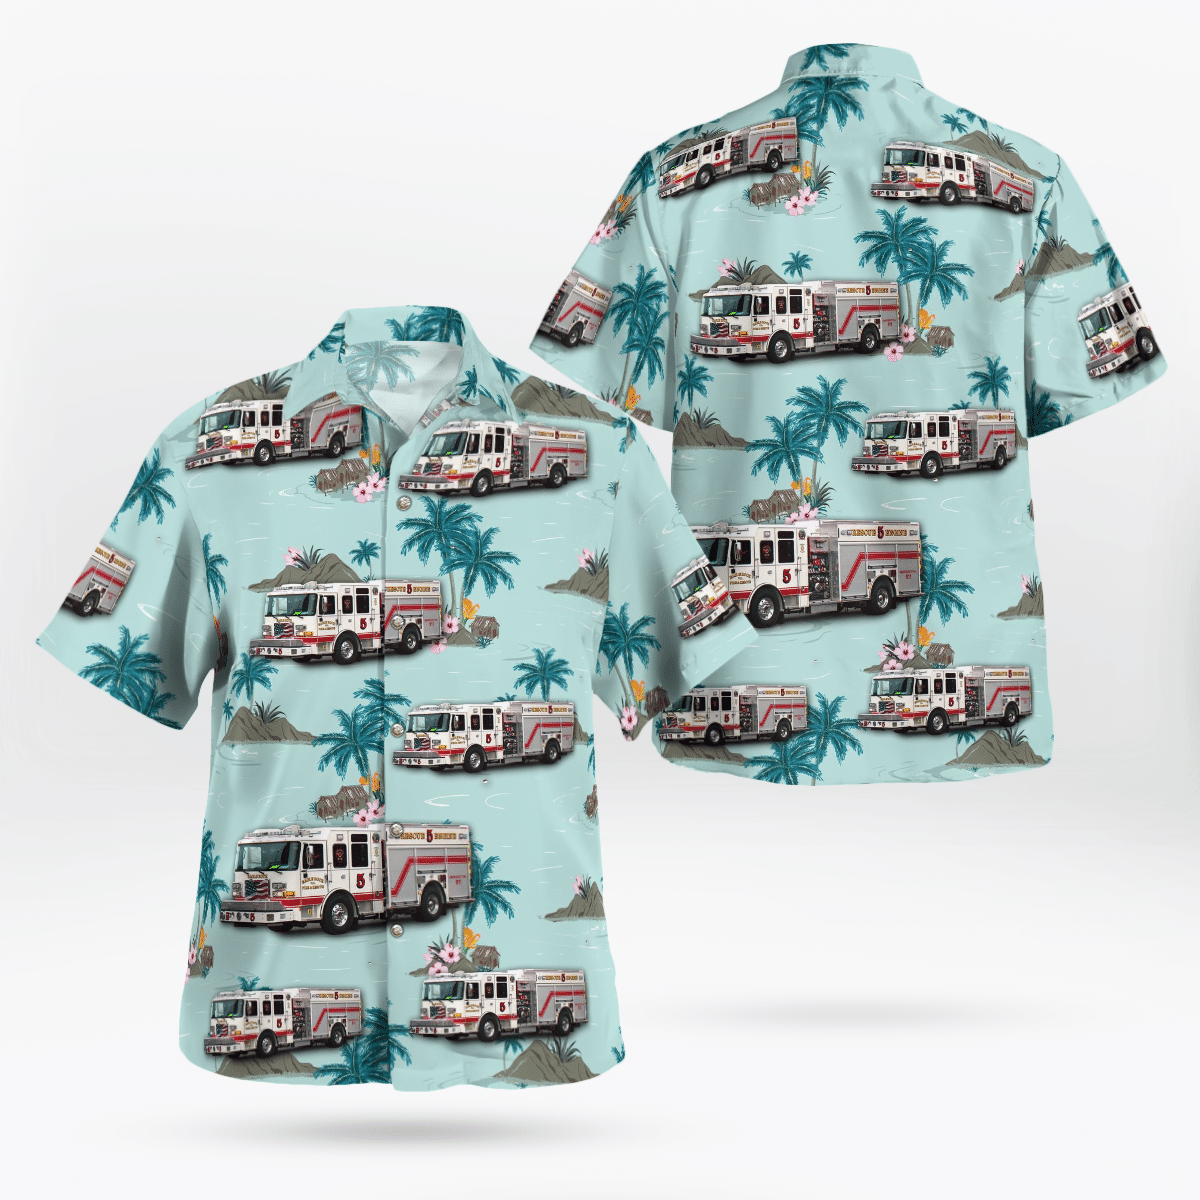 Listed below are some High-quality Aloha Shirt 203